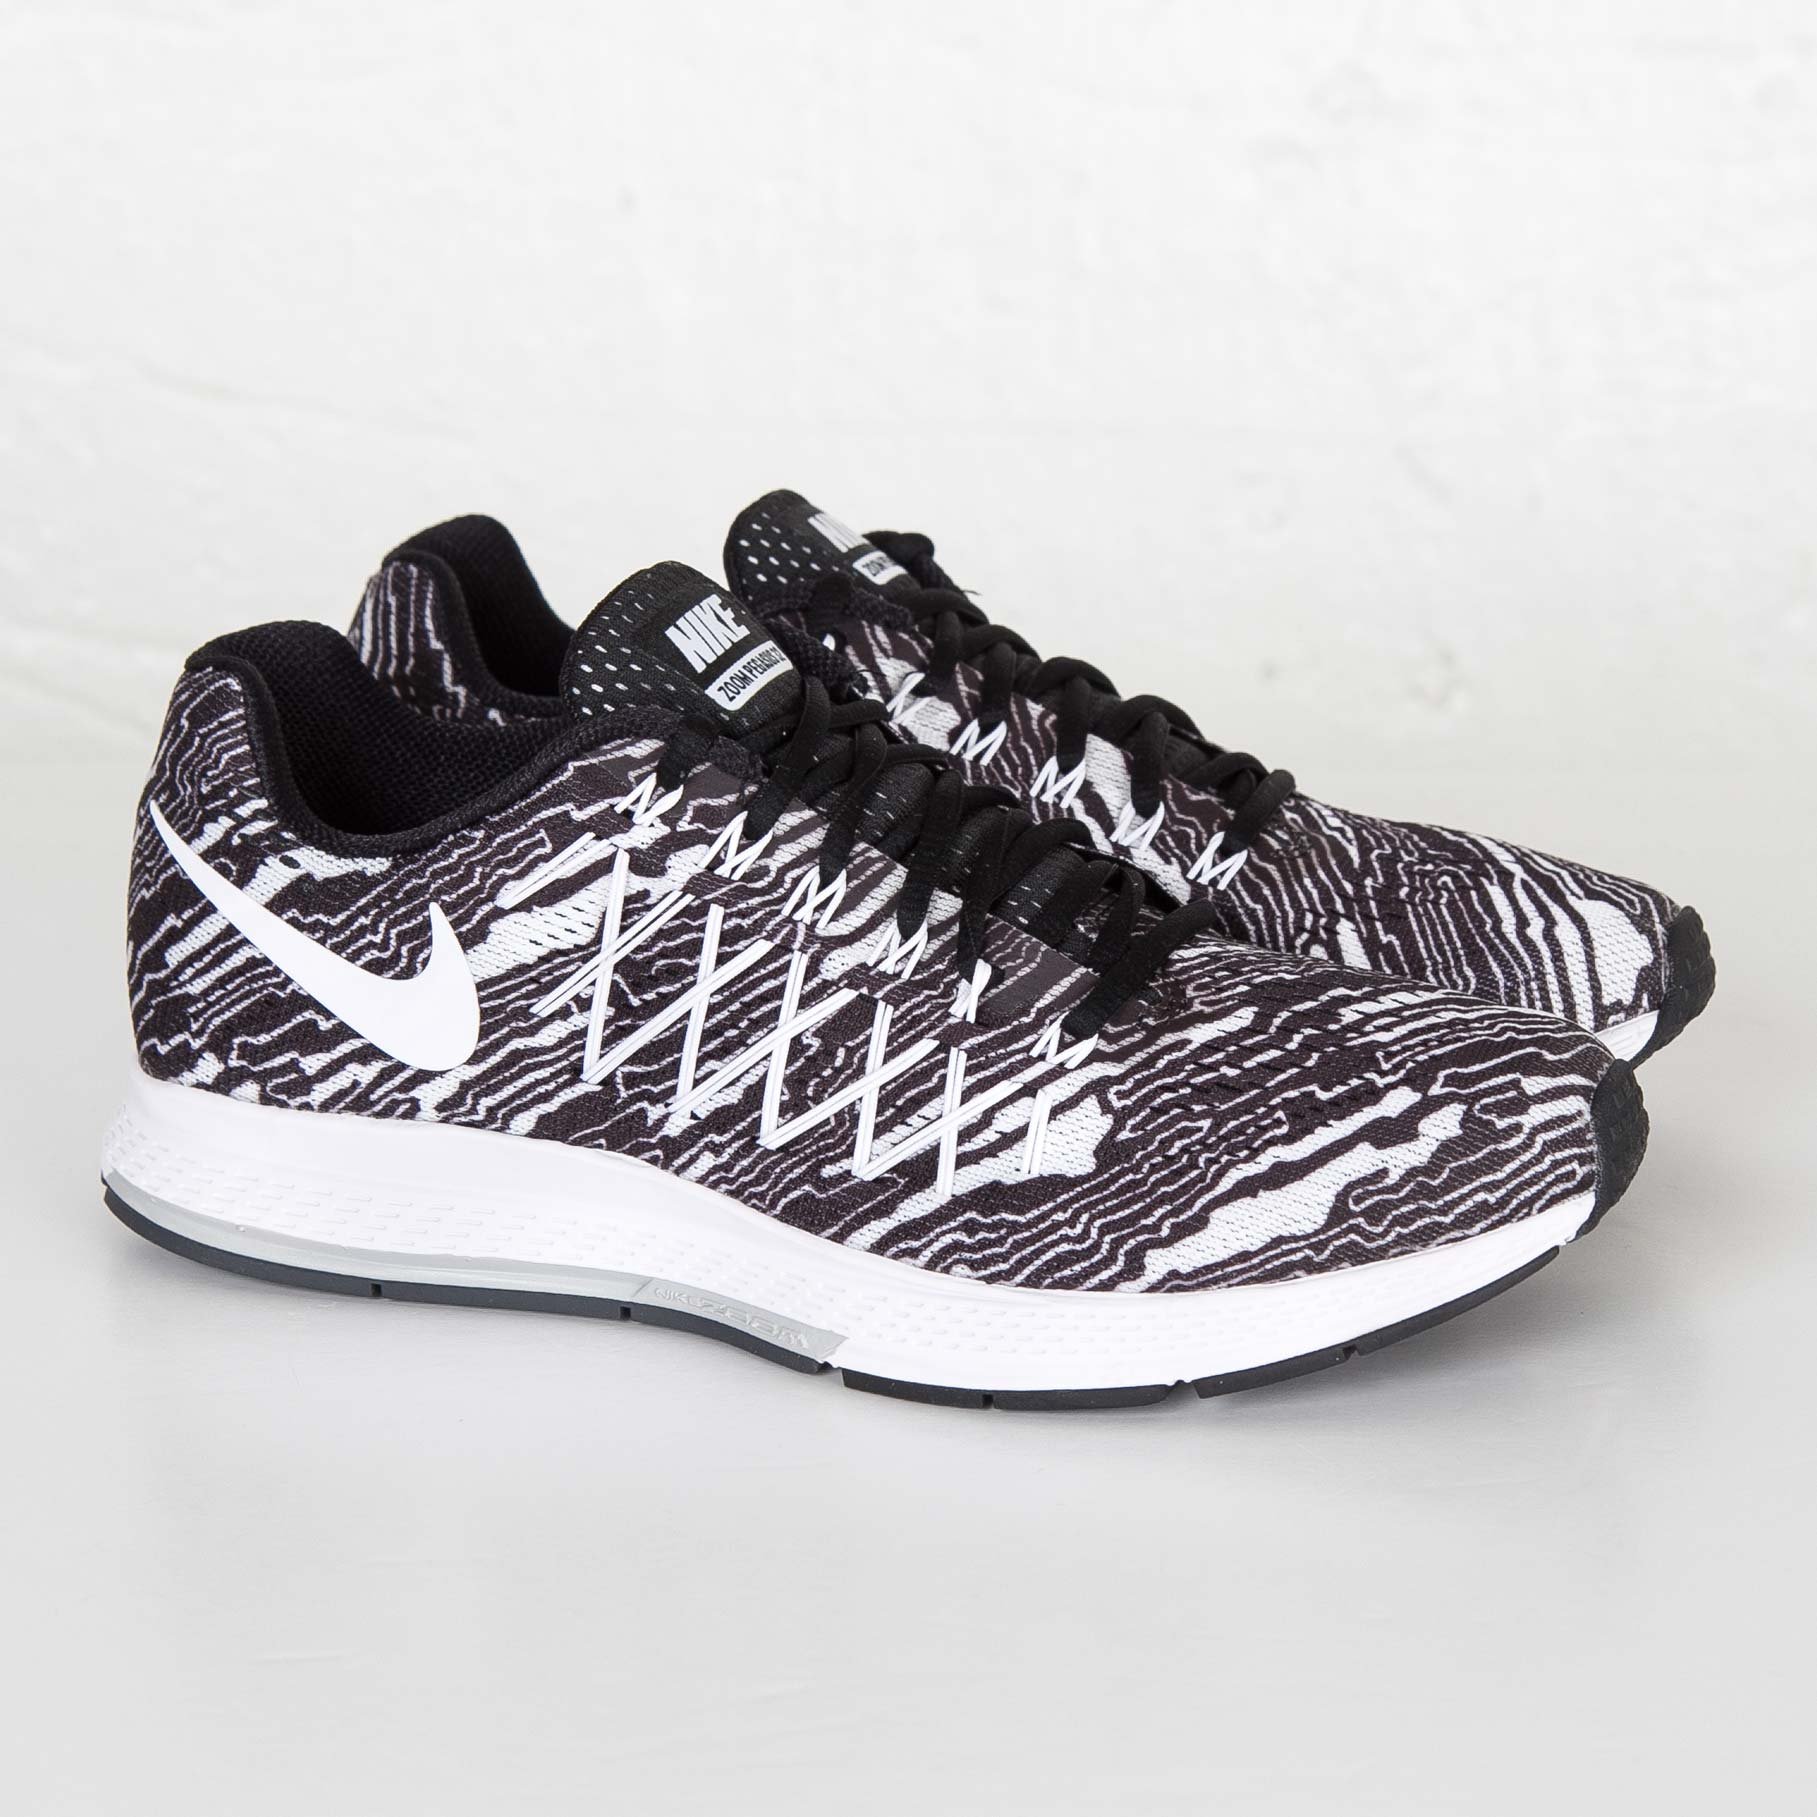 Nike Air Zoom Pegasus 32 Running Shoes in Black/White Print — UFO More